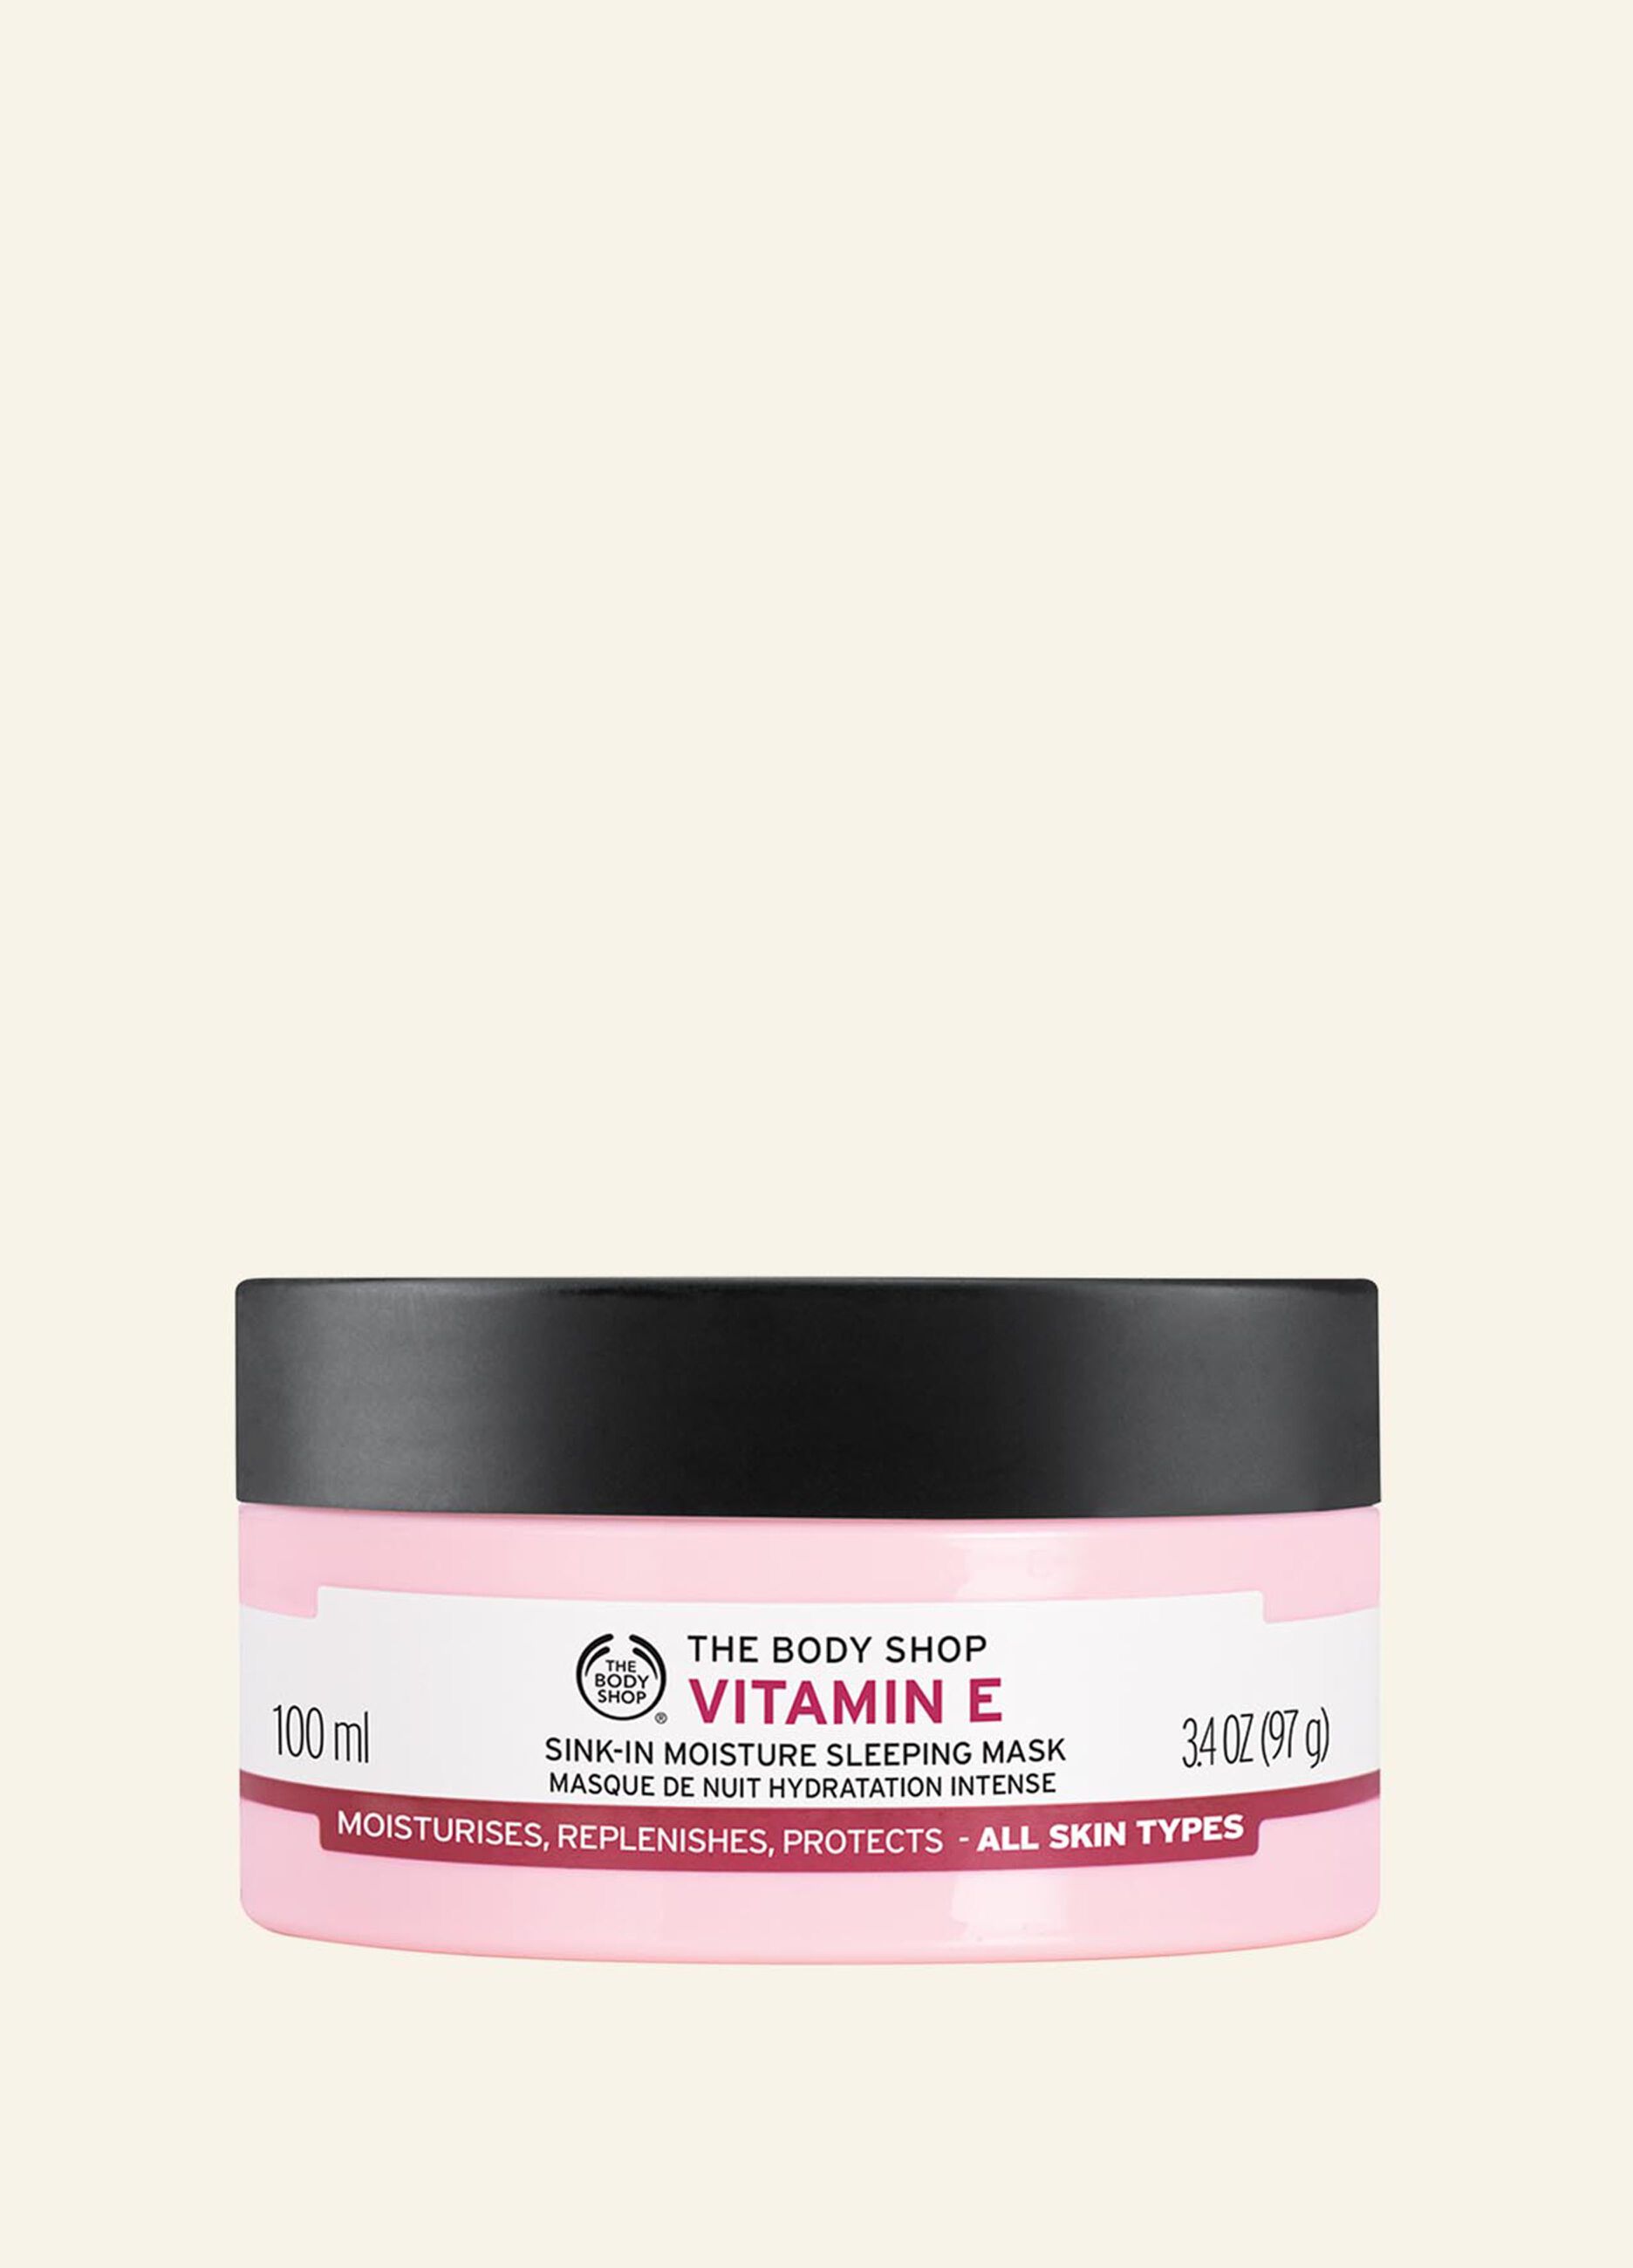 The Body Shop moisturising night mask with vitamin E 100ml